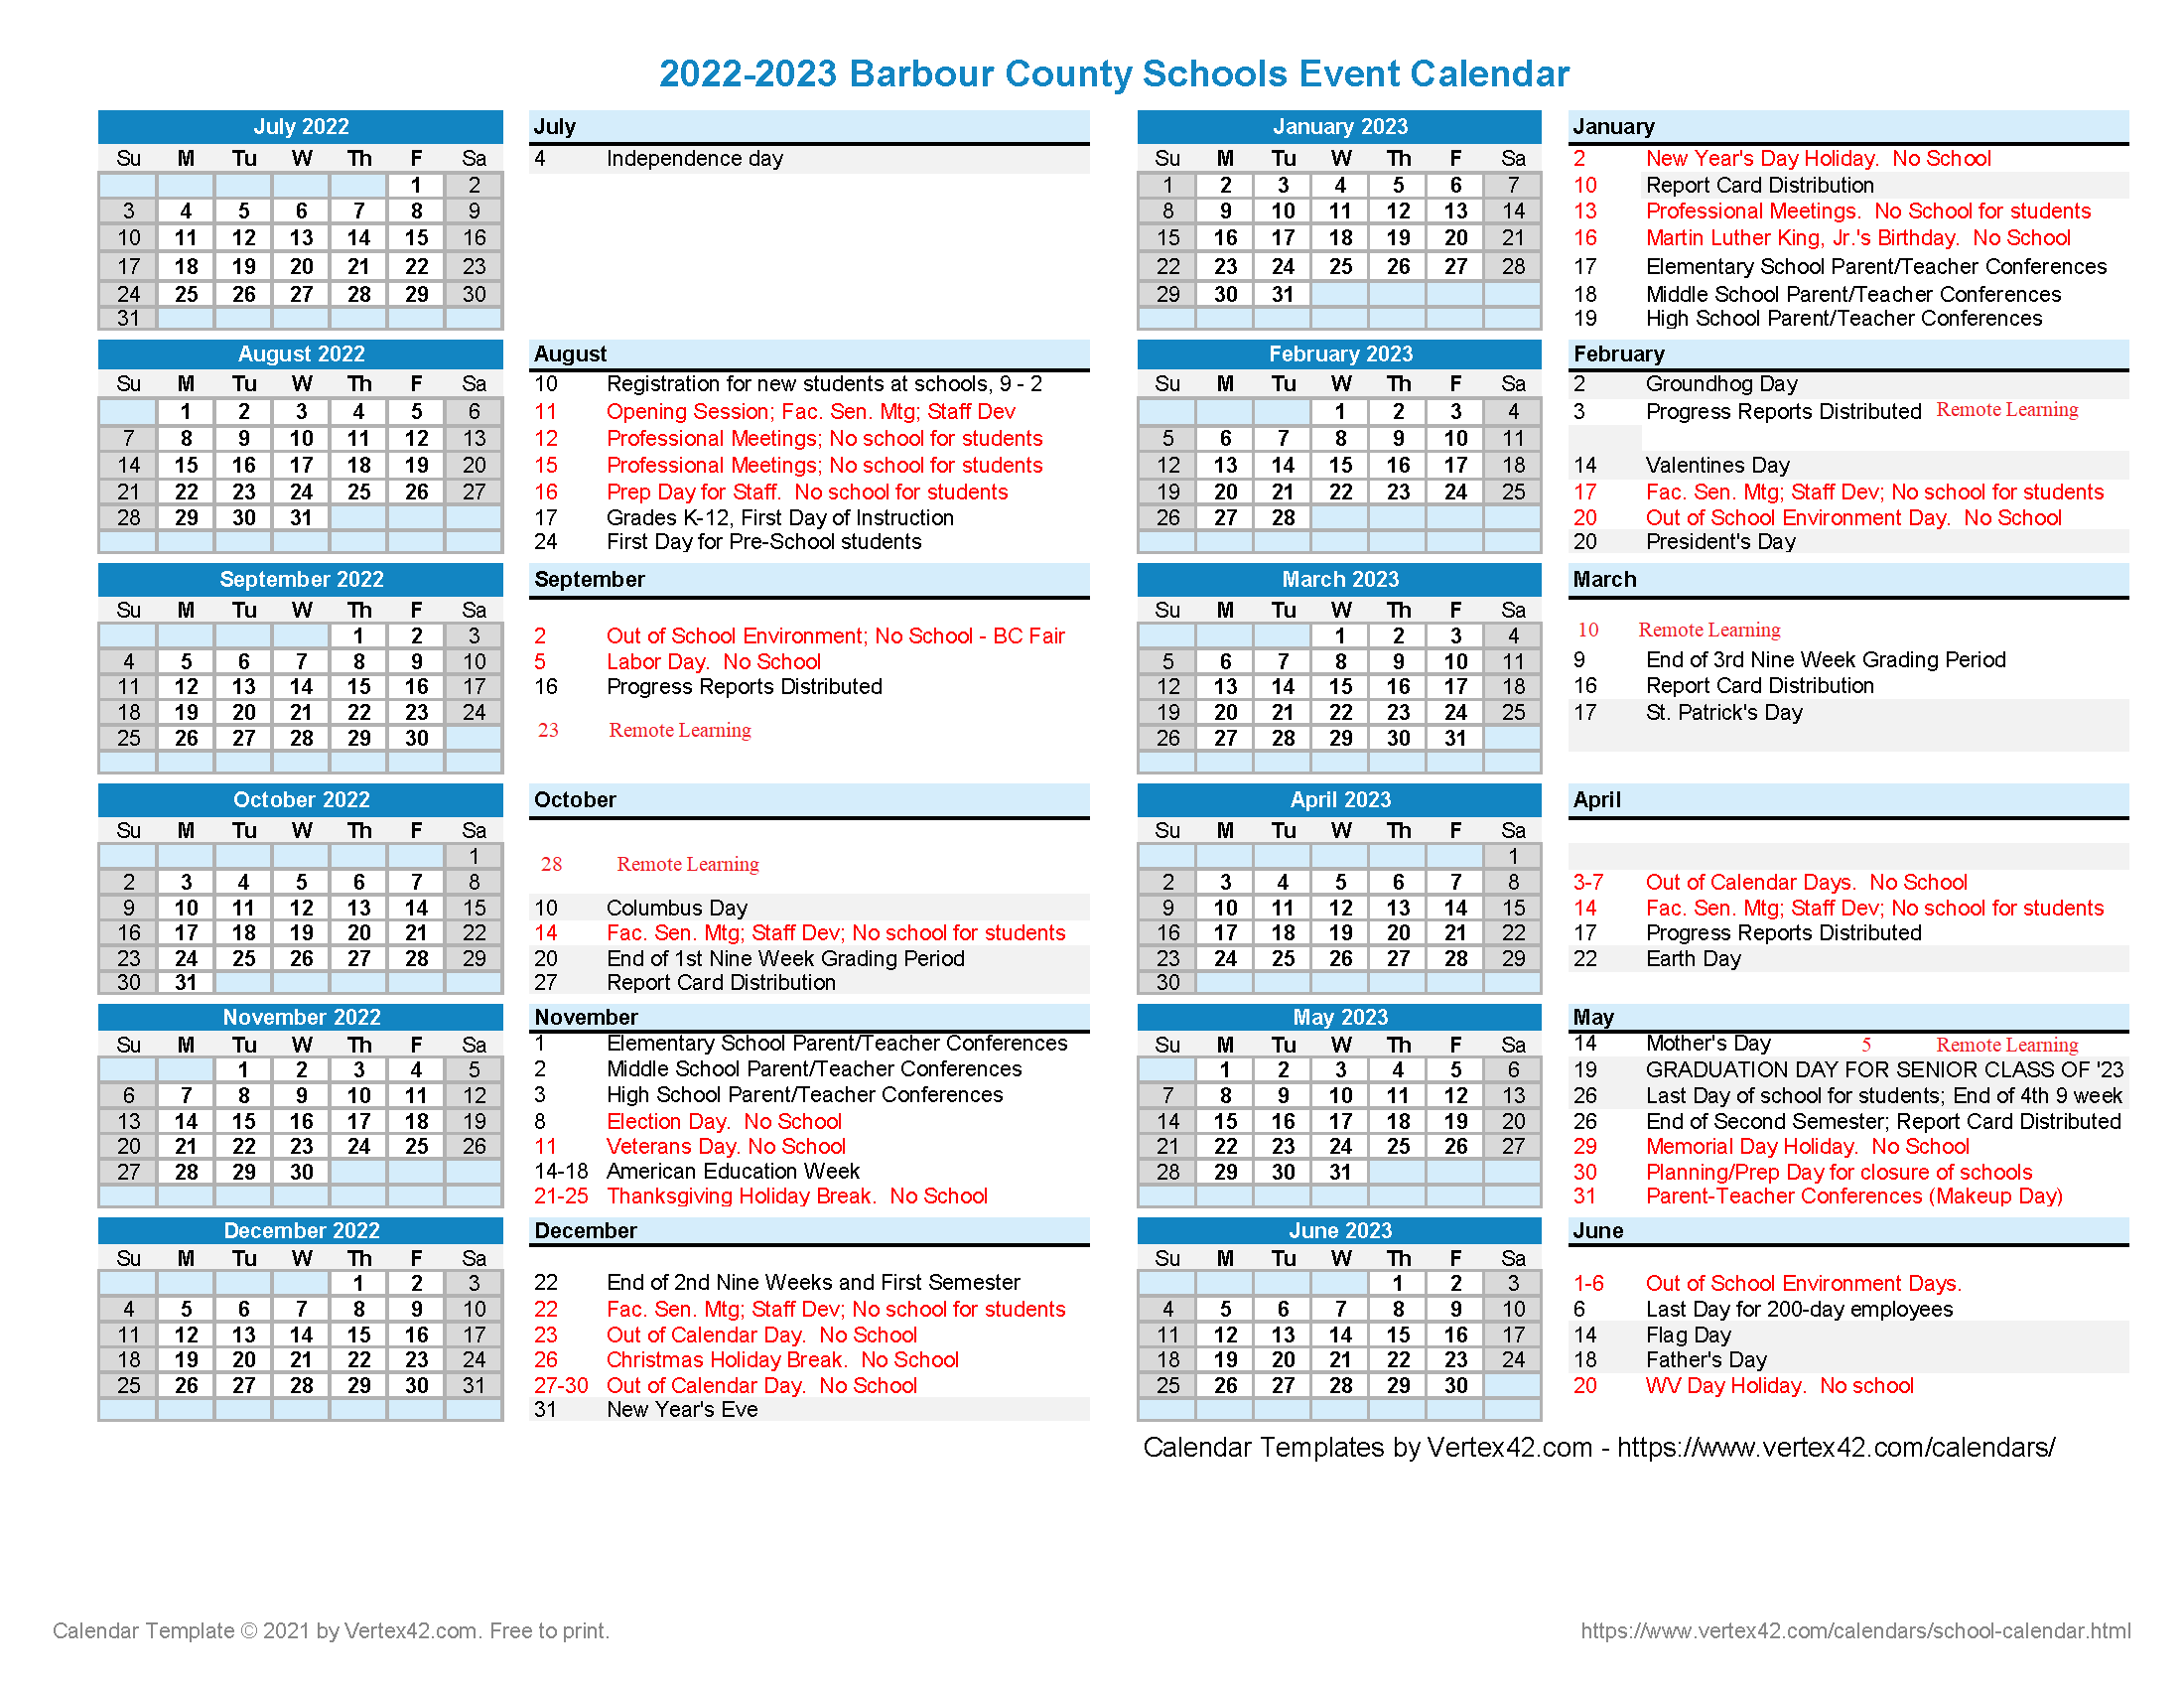 Barbour County Schools Calendar 2022 And 2023 PublicHolidays